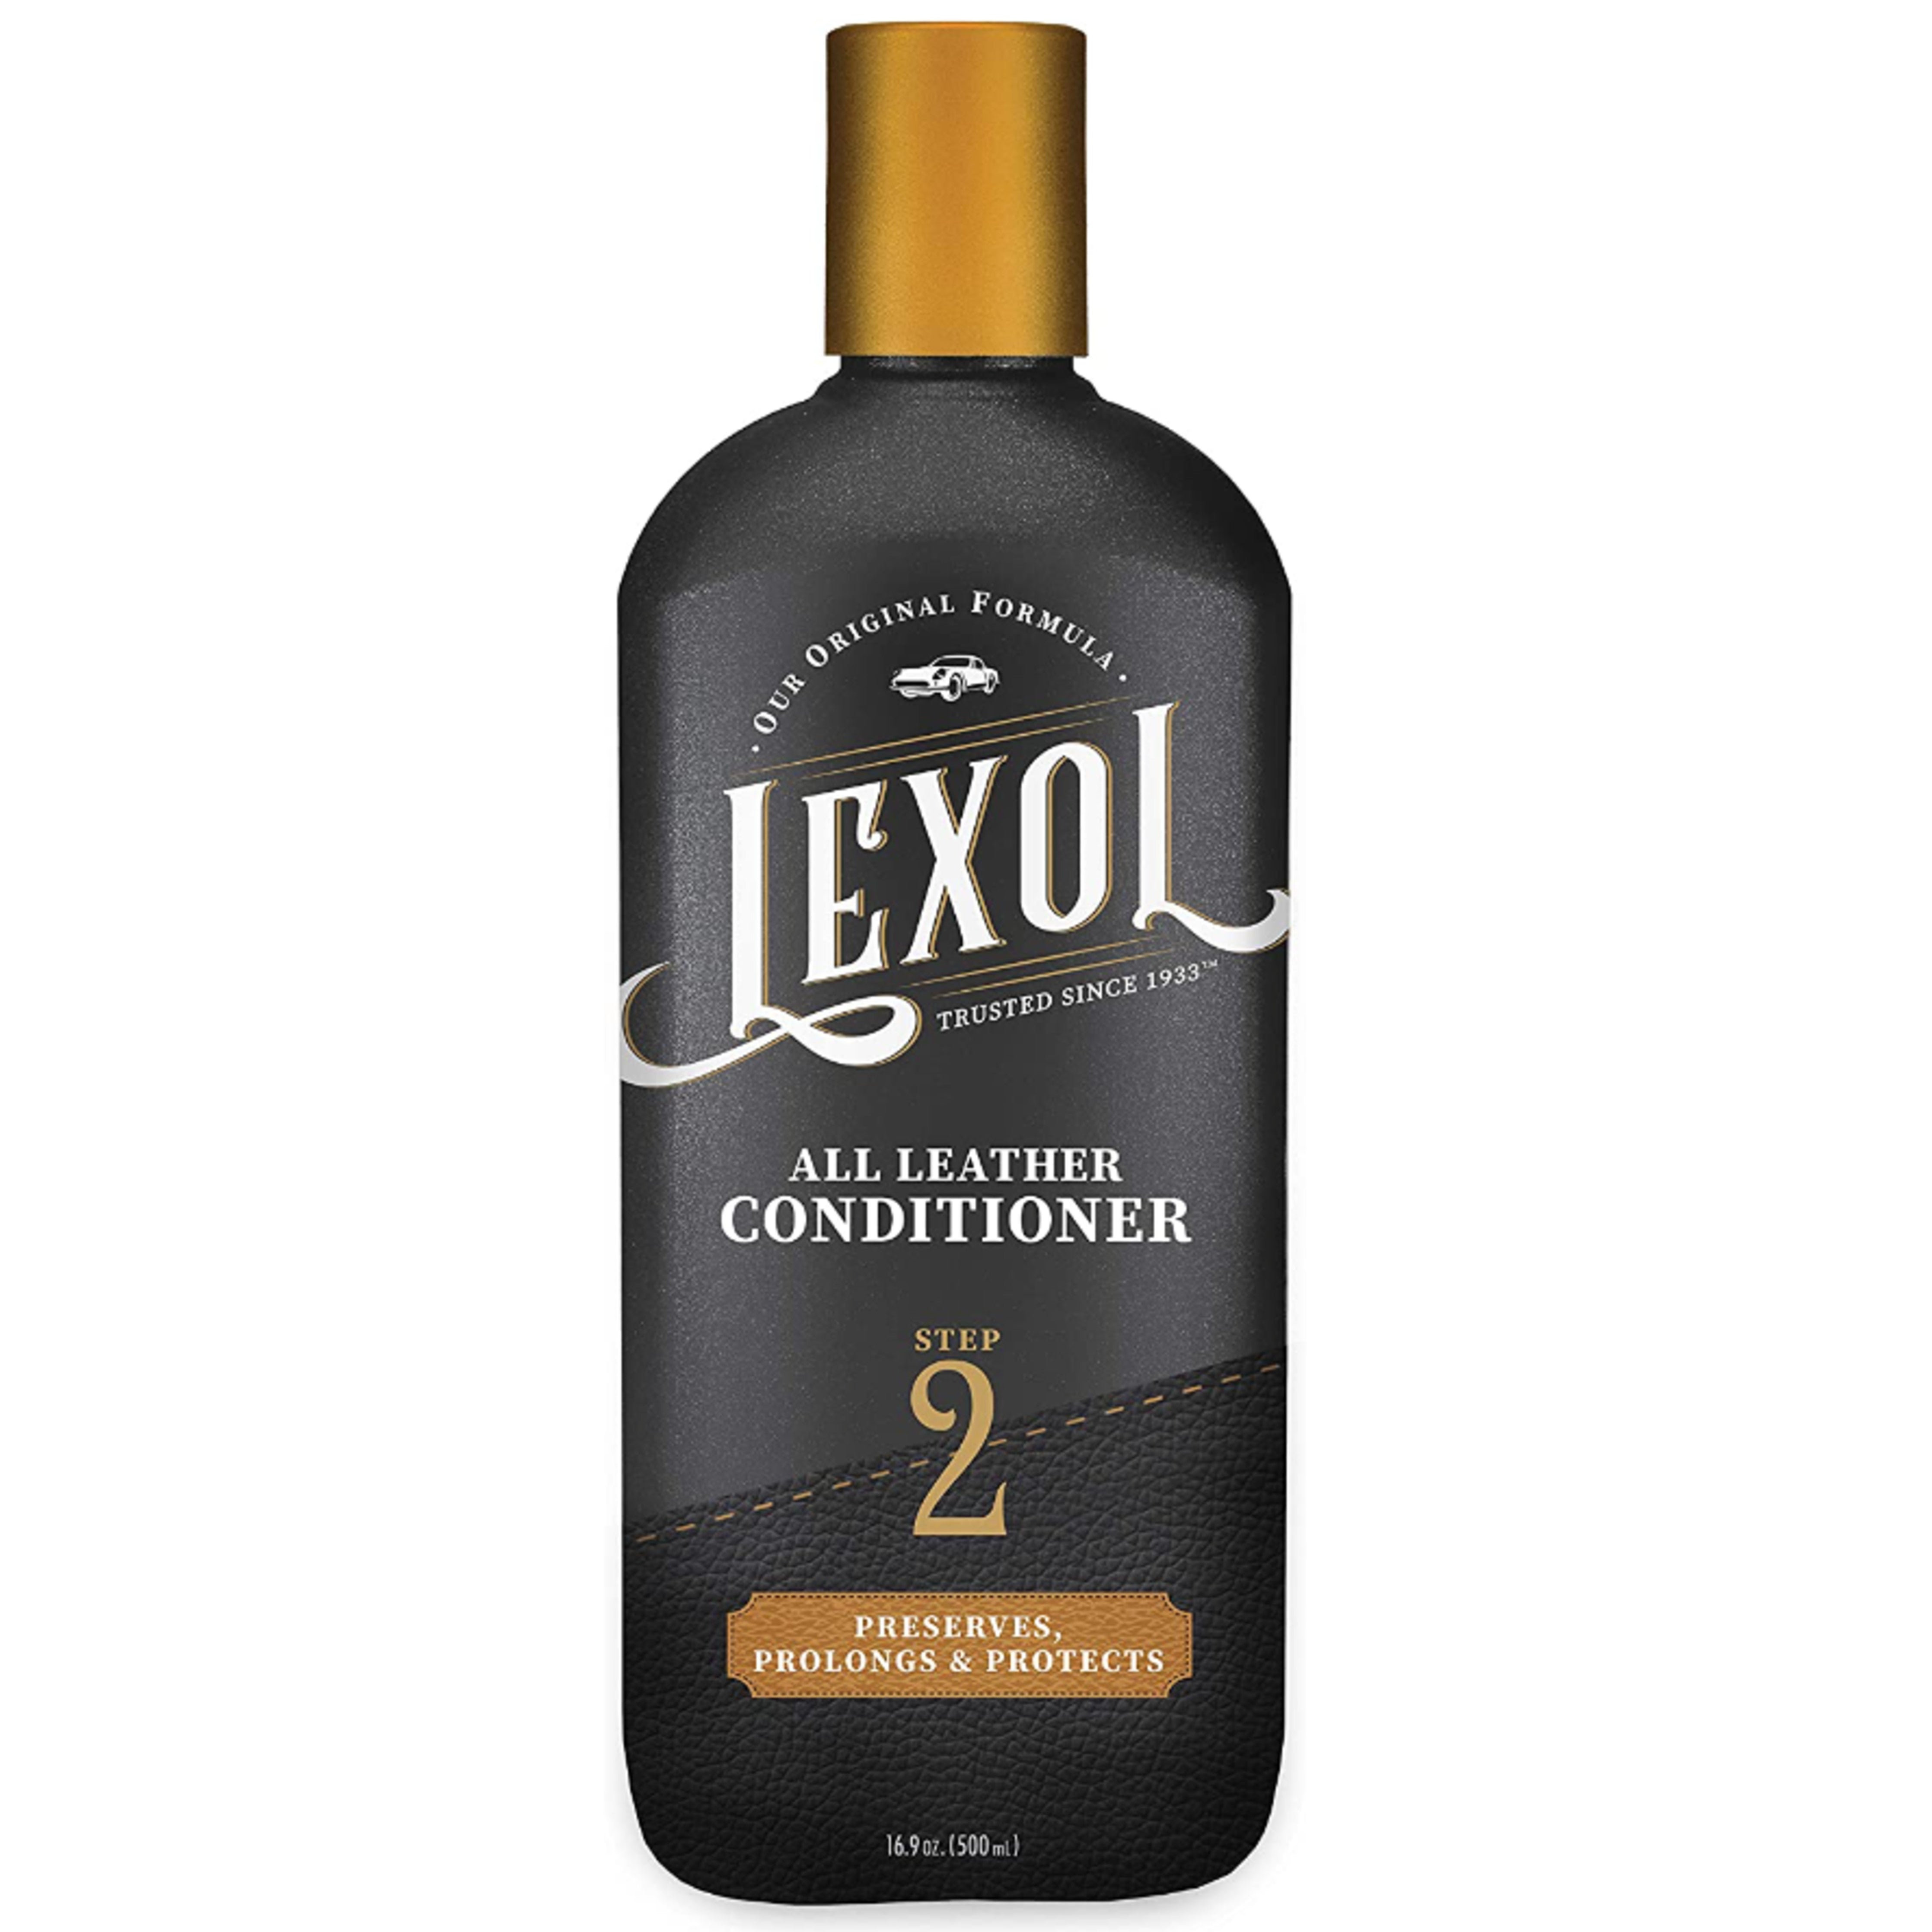 Lexol Neatsfoot Leather Conditioner